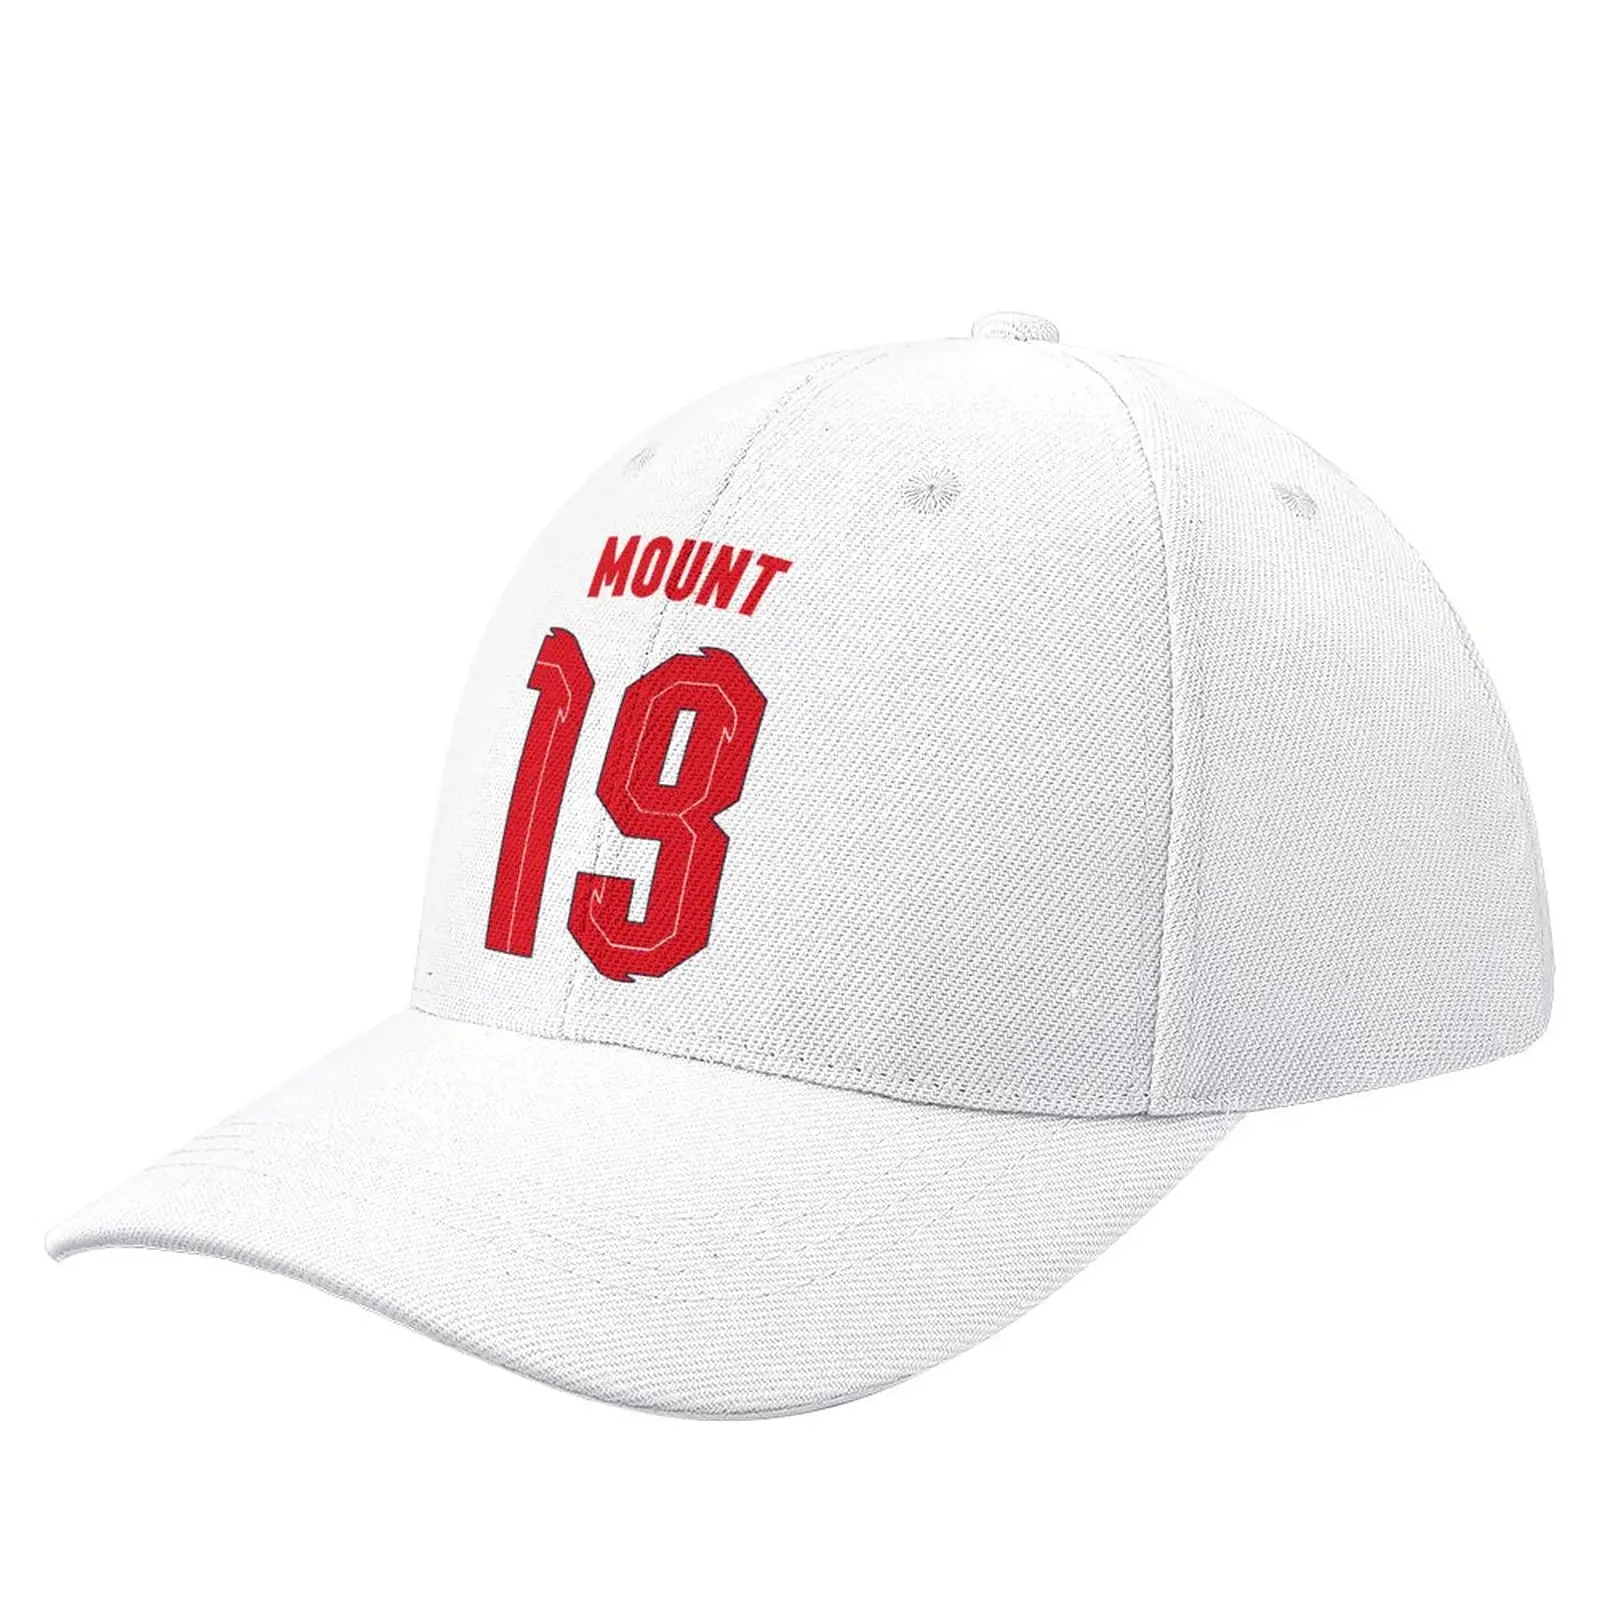 

Men Women Hat 19 Mason Mount Home Baseball Cap Wild Sun Shade Peaked Hats Adjustable Caps for Fans 100% Polyester